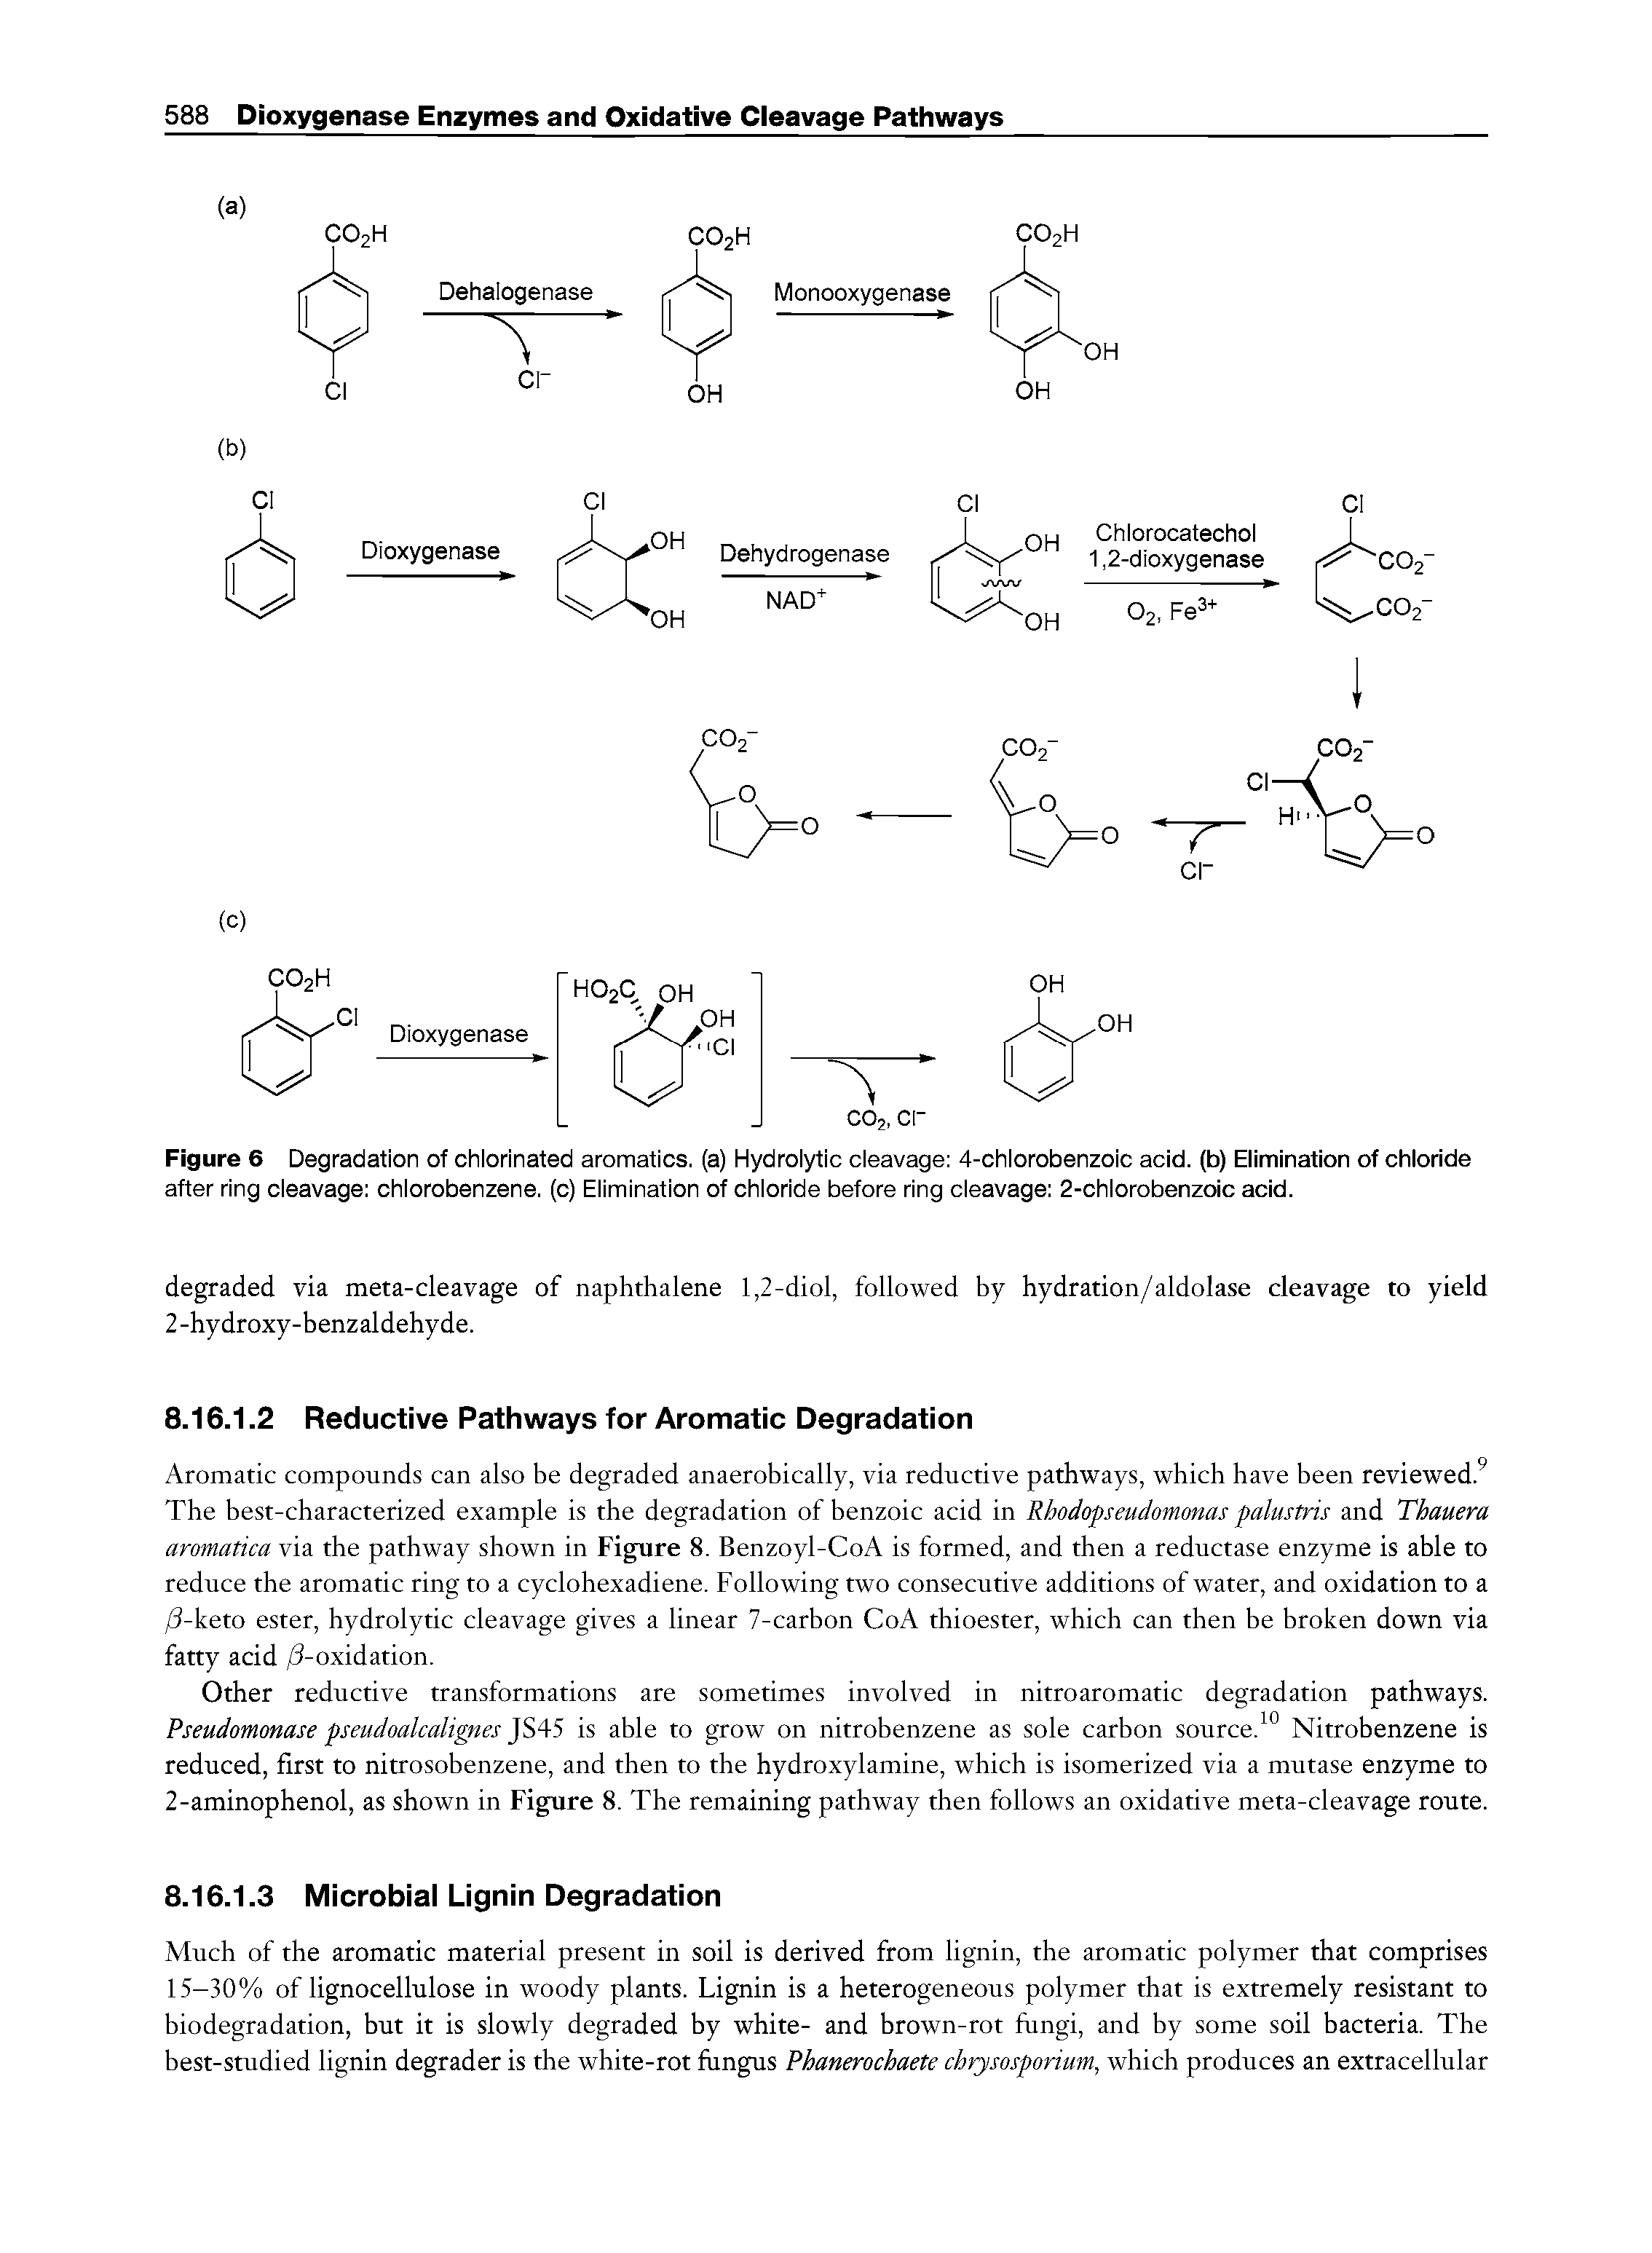 Figure 6 Degradation of chlorinated aromatics, (a) Hydrolytic cleavage 4-chlorobenzoic acid, (b) Elimination of chloride after ring cleavage chlorobenzene, (c) Elimination of chloride before ring cleavage 2-chlorobenzoic acid.